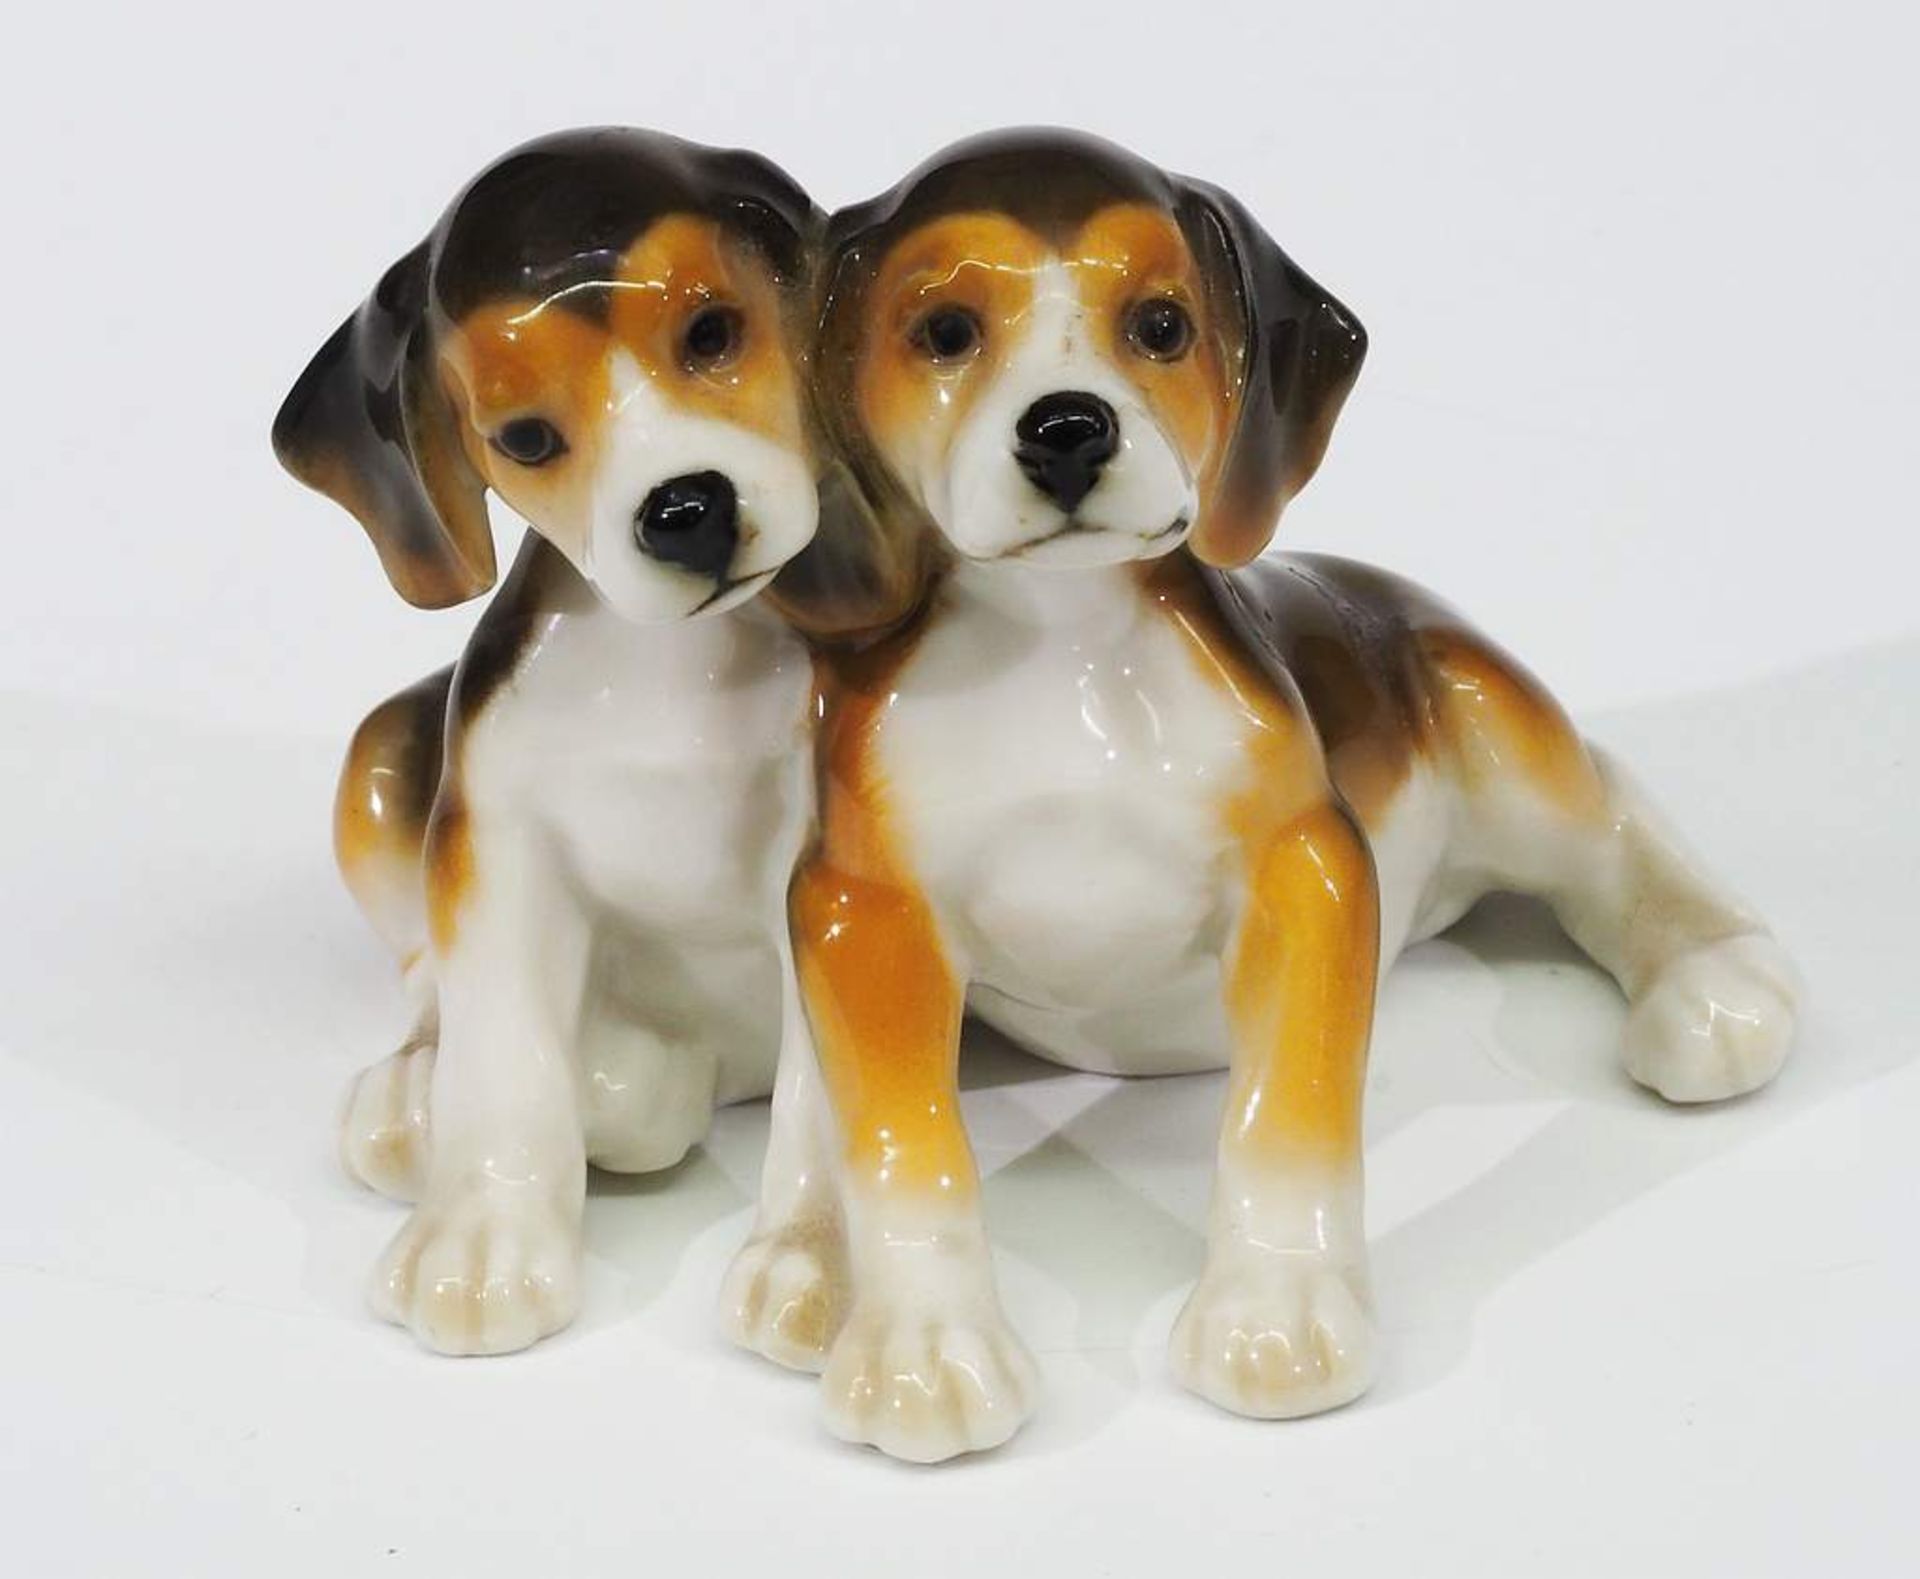 Miniatur-Tierfigurengruppe "Paar sitzende Hundelwelpen", HUTSCHENREUTHER, 20. Jahrhundert. - Bild 2 aus 7